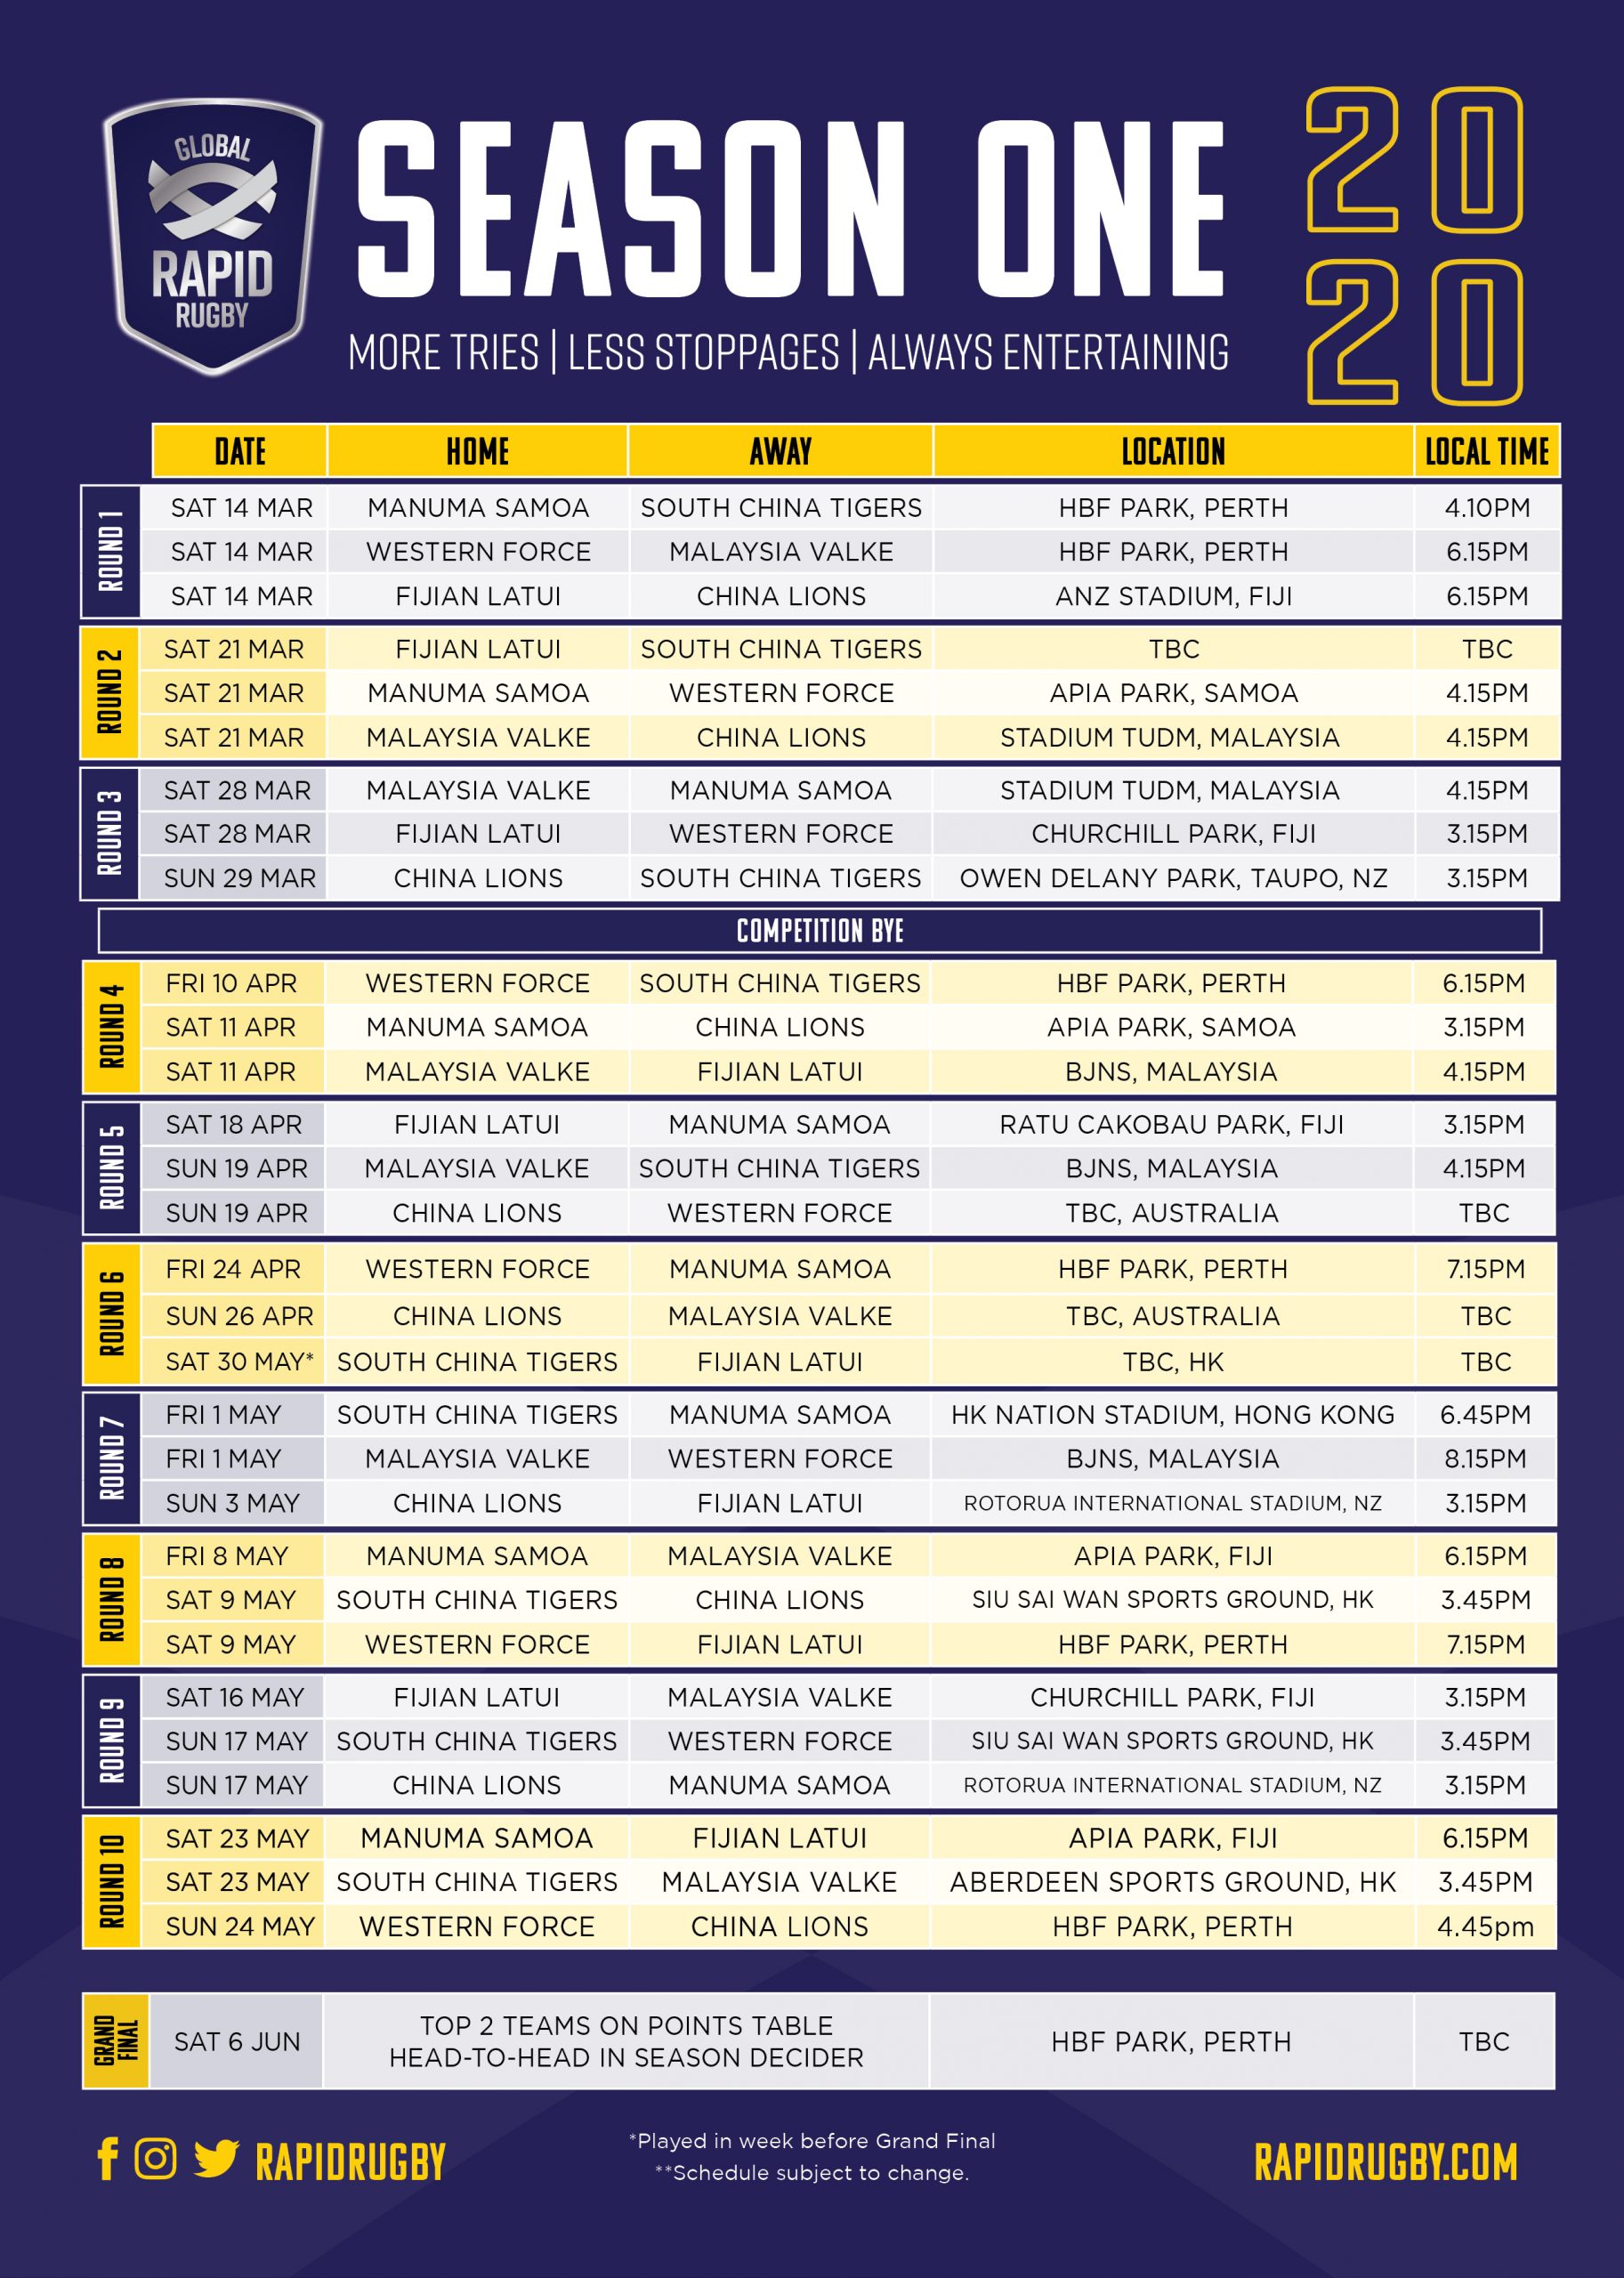 2020-Global-Rapid-Rugby-Schedule-February-25-2020_01-scaled.jpg